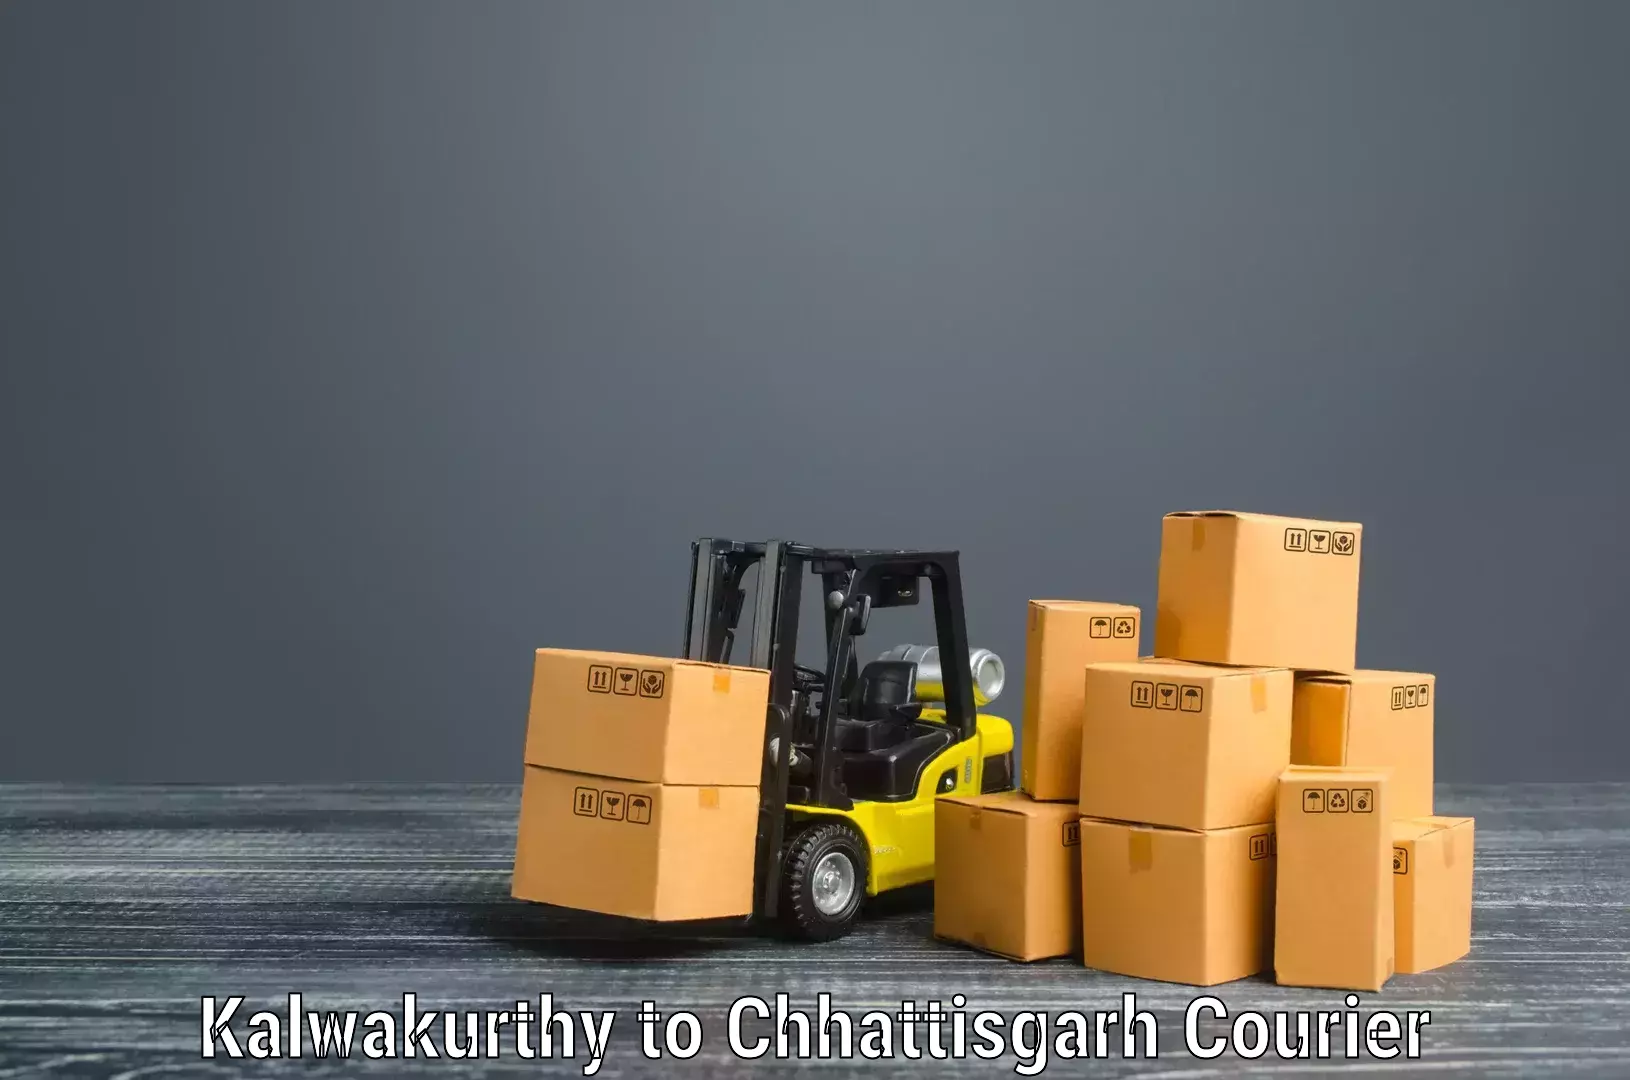 Professional goods transport in Kalwakurthy to Korea Chhattisgarh